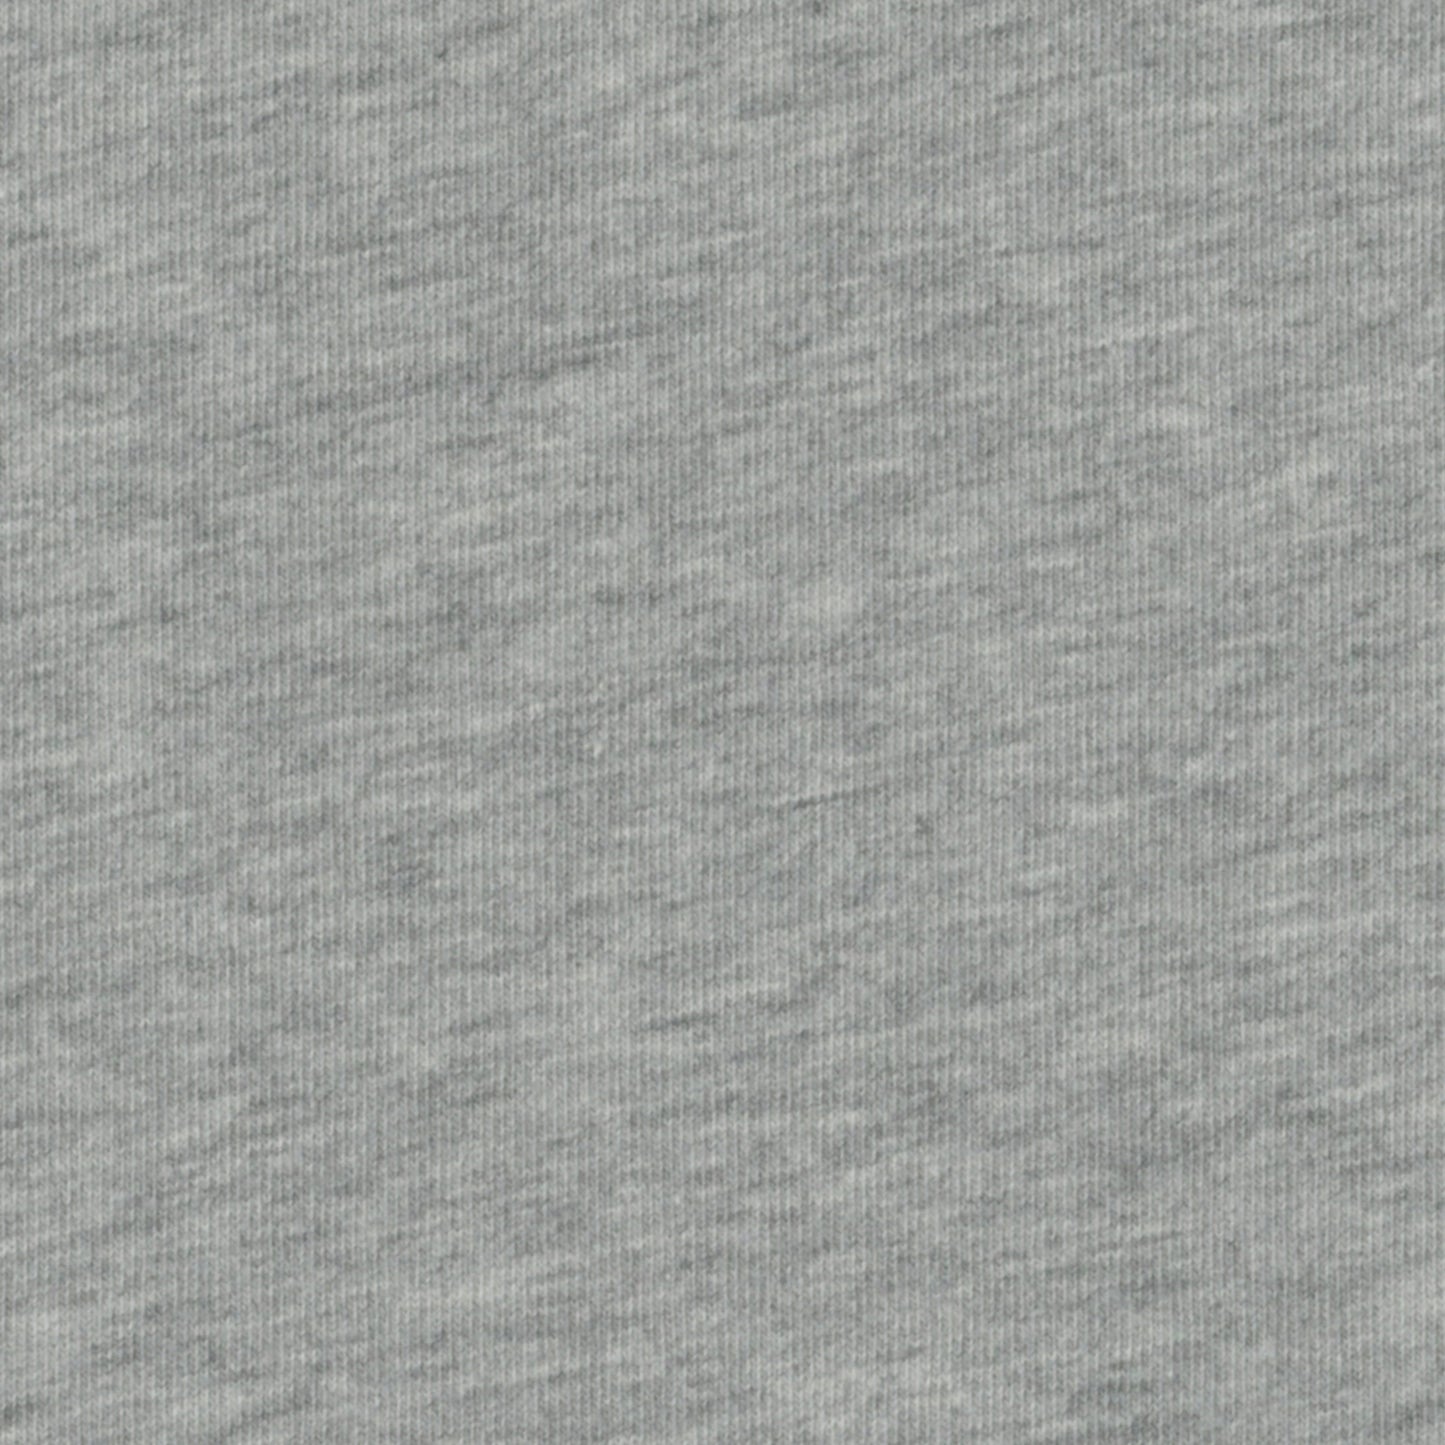 Organic Crossweave Cotton Fabric - Grey Marl